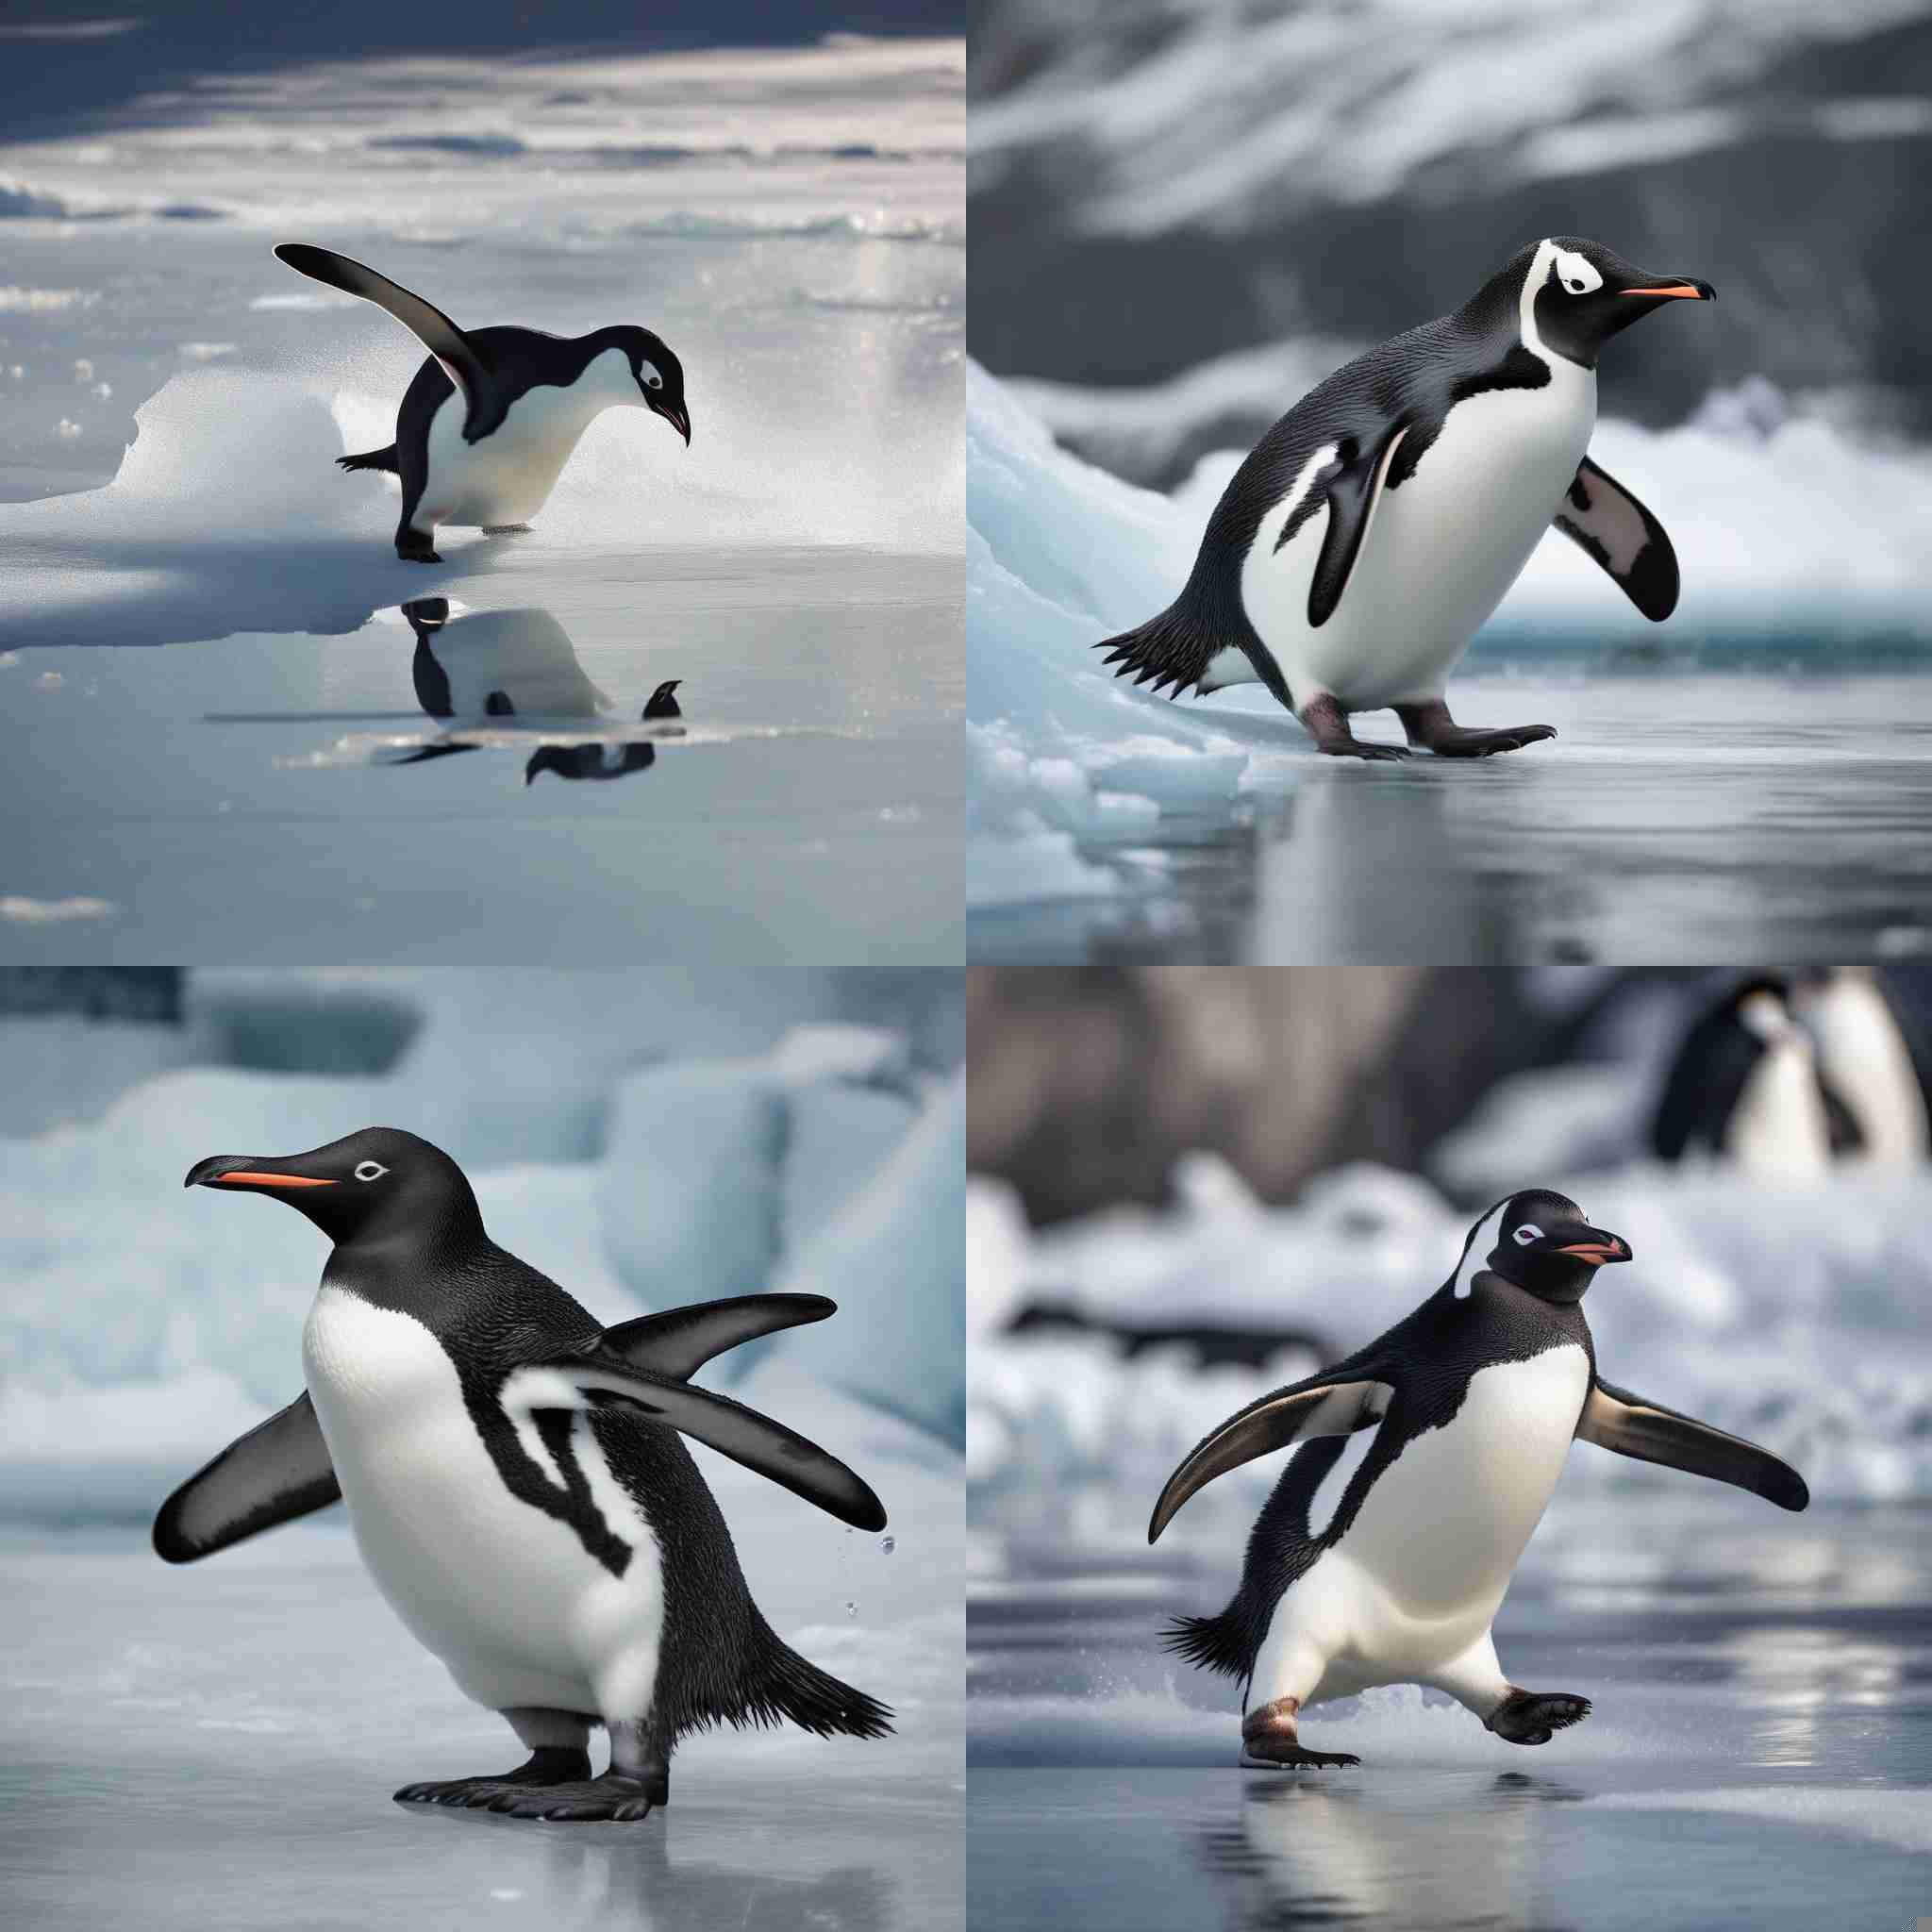 A penguin sliding on ice